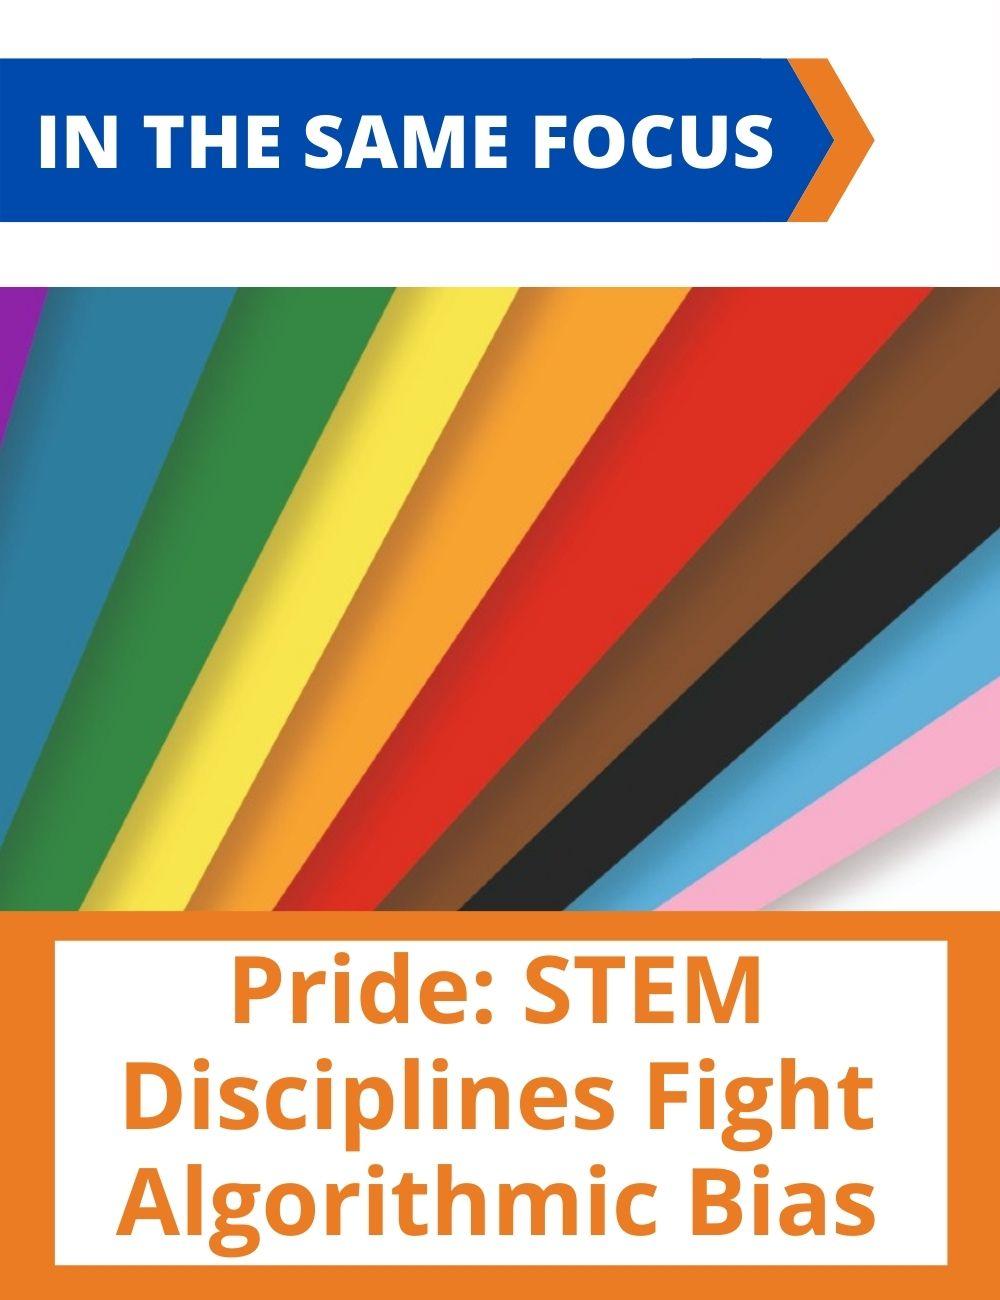 Link to related stories. Image: rainbow colors. Story headline: Pride: STEM Disciplines Fight Algorithmic Bias